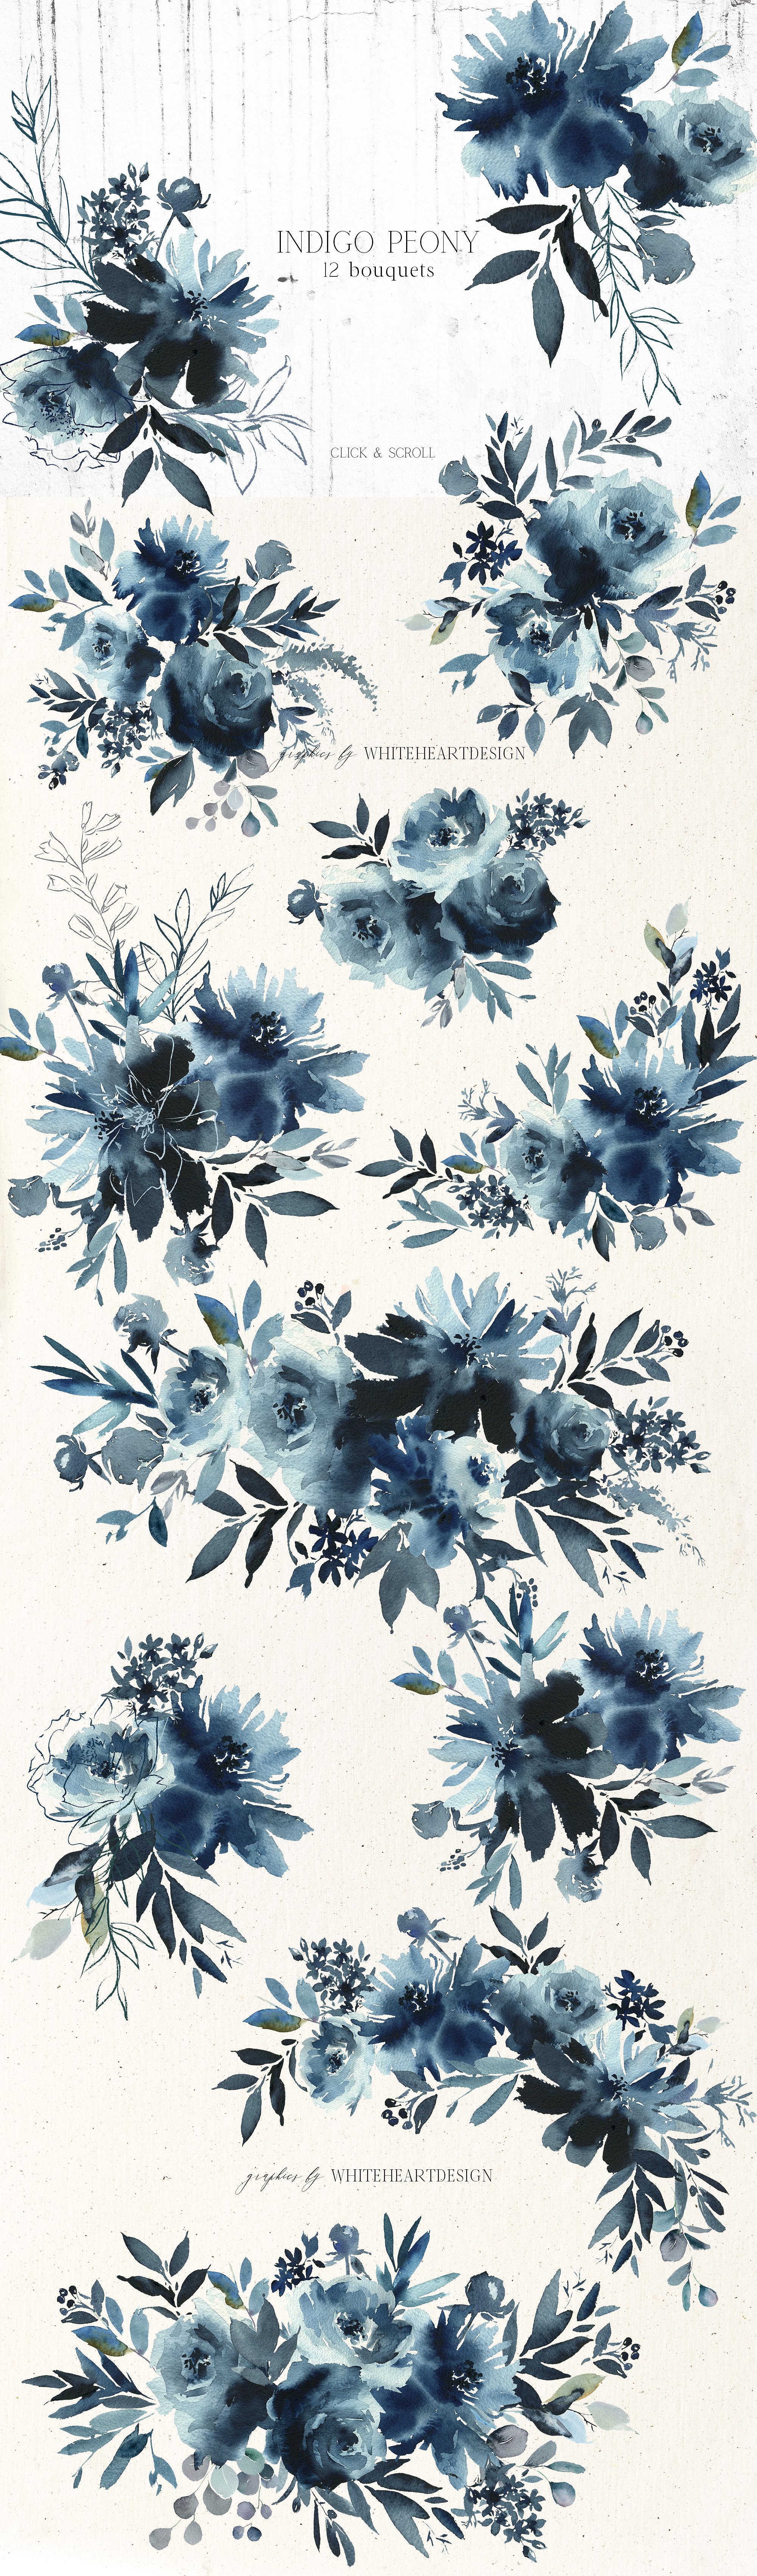 靛蓝牡丹花水彩花卉剪贴画 Indigo Peony Watercolor Floral Set插图(1)